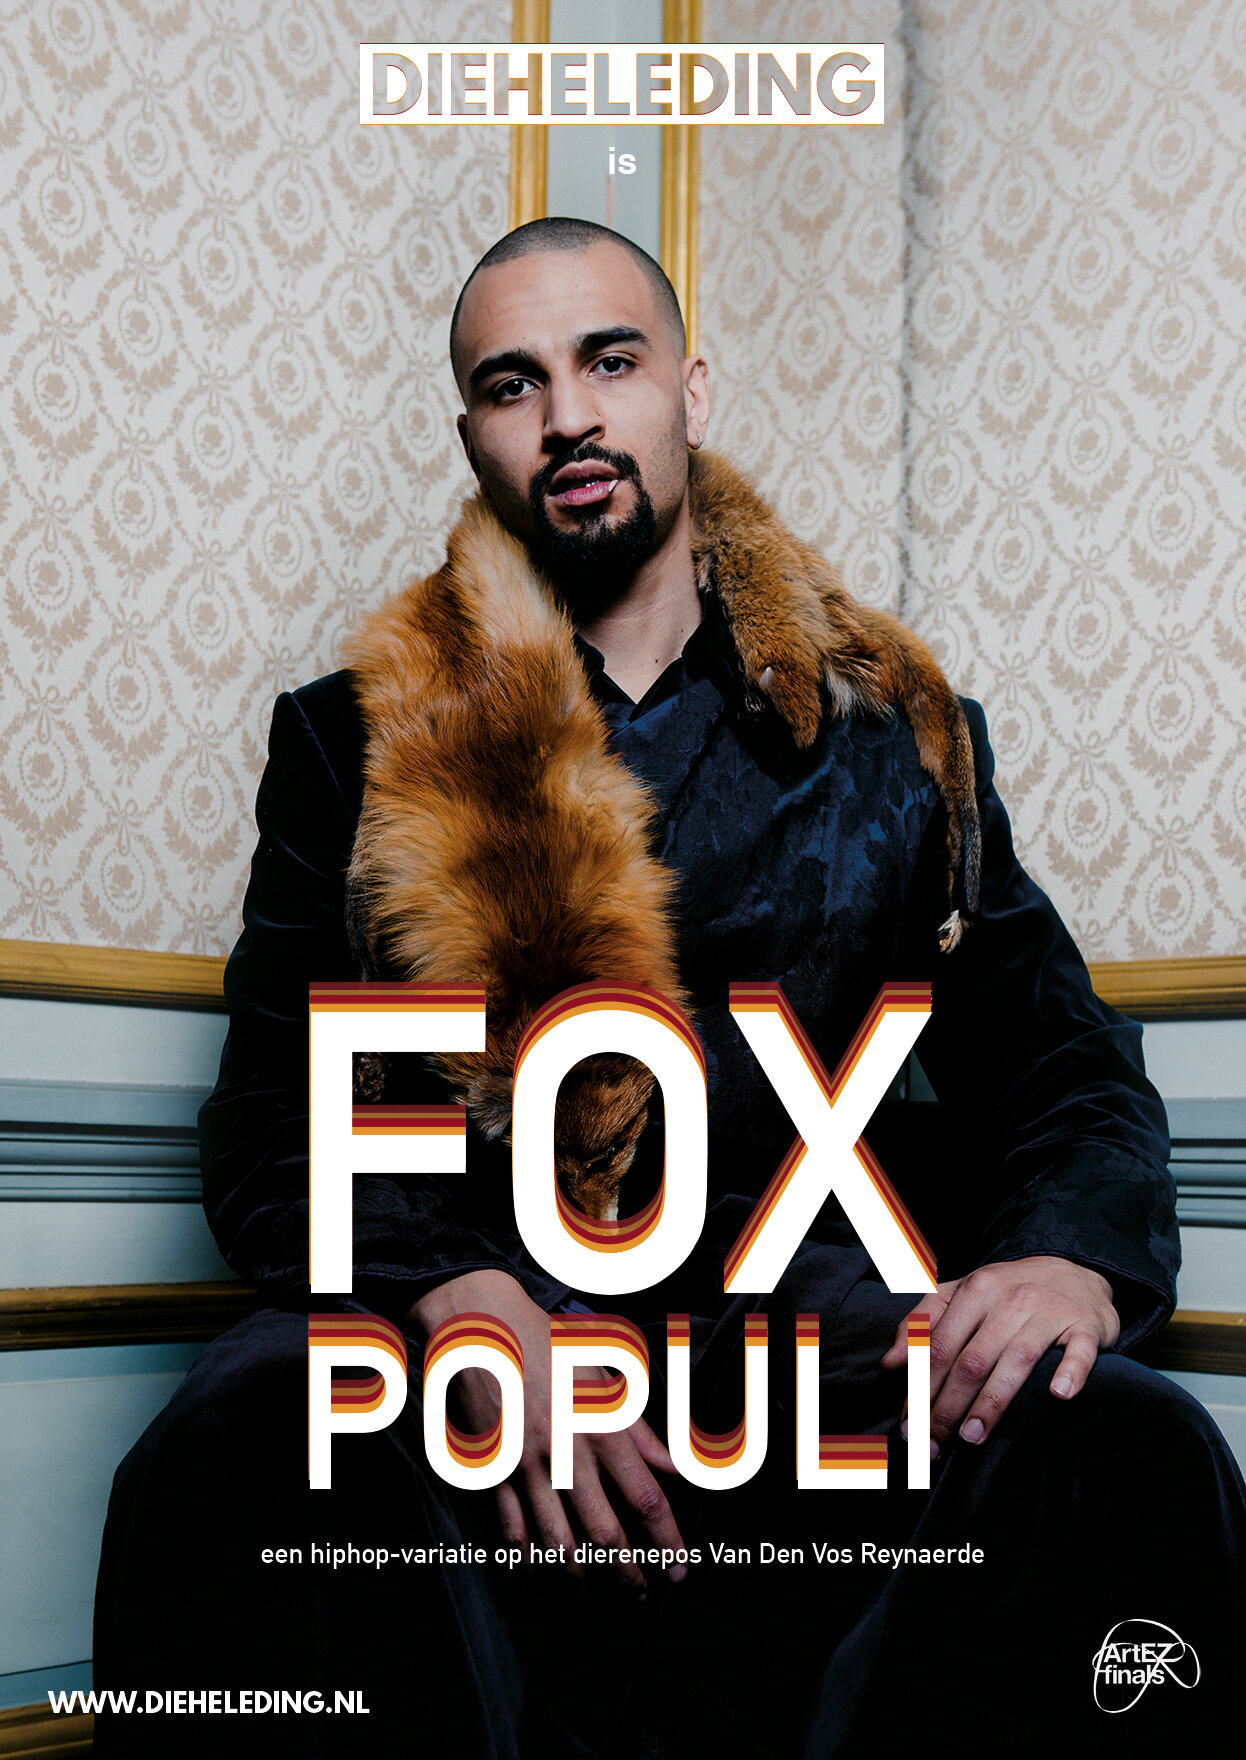 Fox populi poster A3 - v4 9 aprilDalo@0,25x (1).jpg